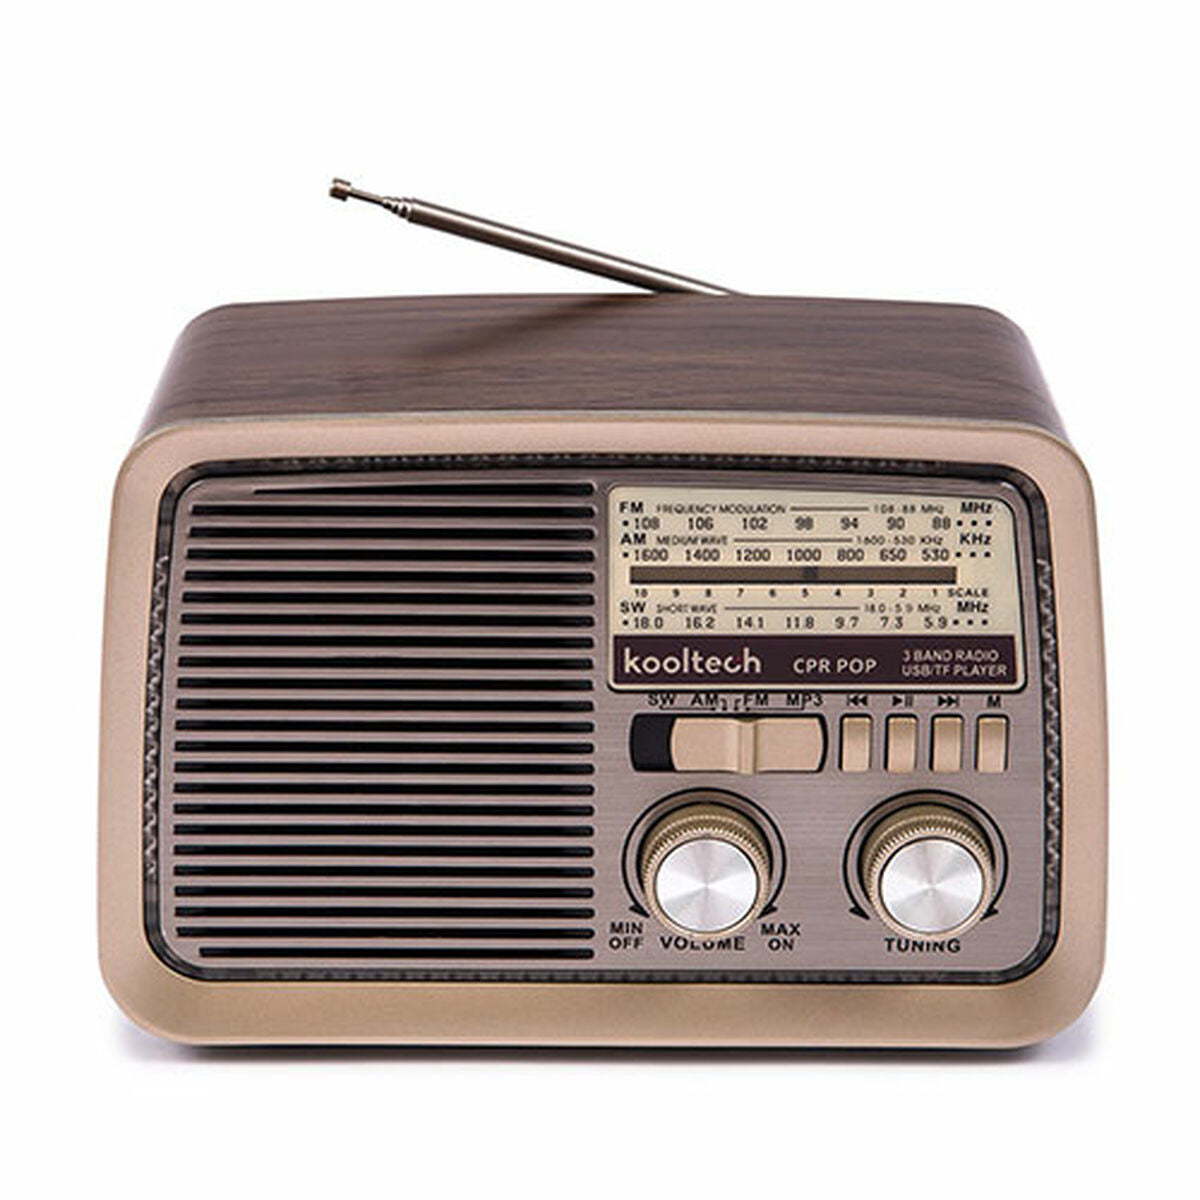 Kooltech CPR POP Vintage Brown Tragbares Bluetooth-Radio